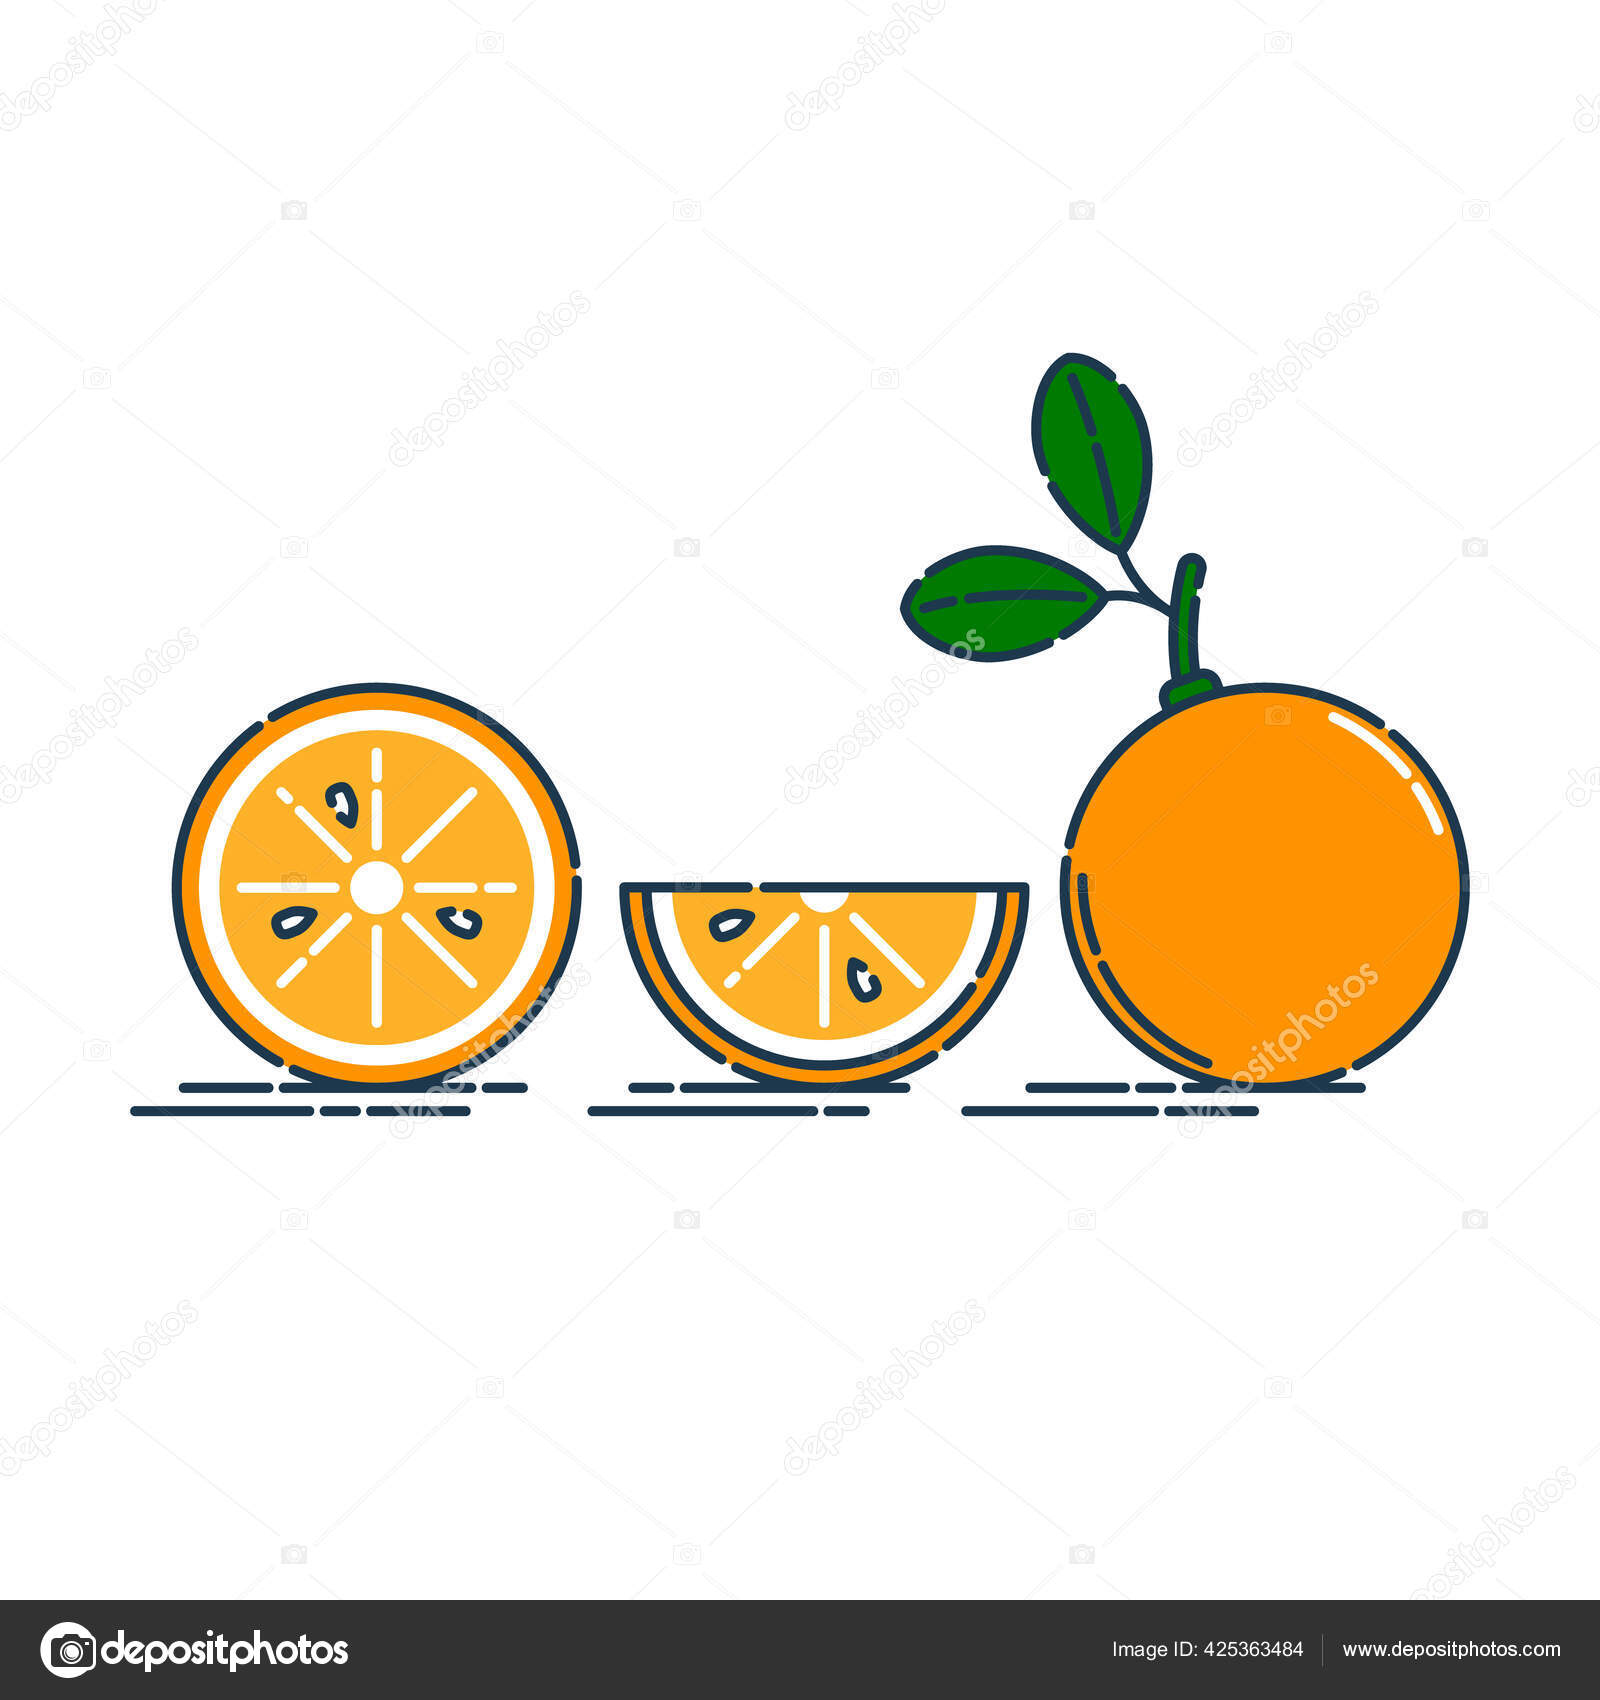 Results from following Bardot Brush: Draw a cute orange : r/ProCreate